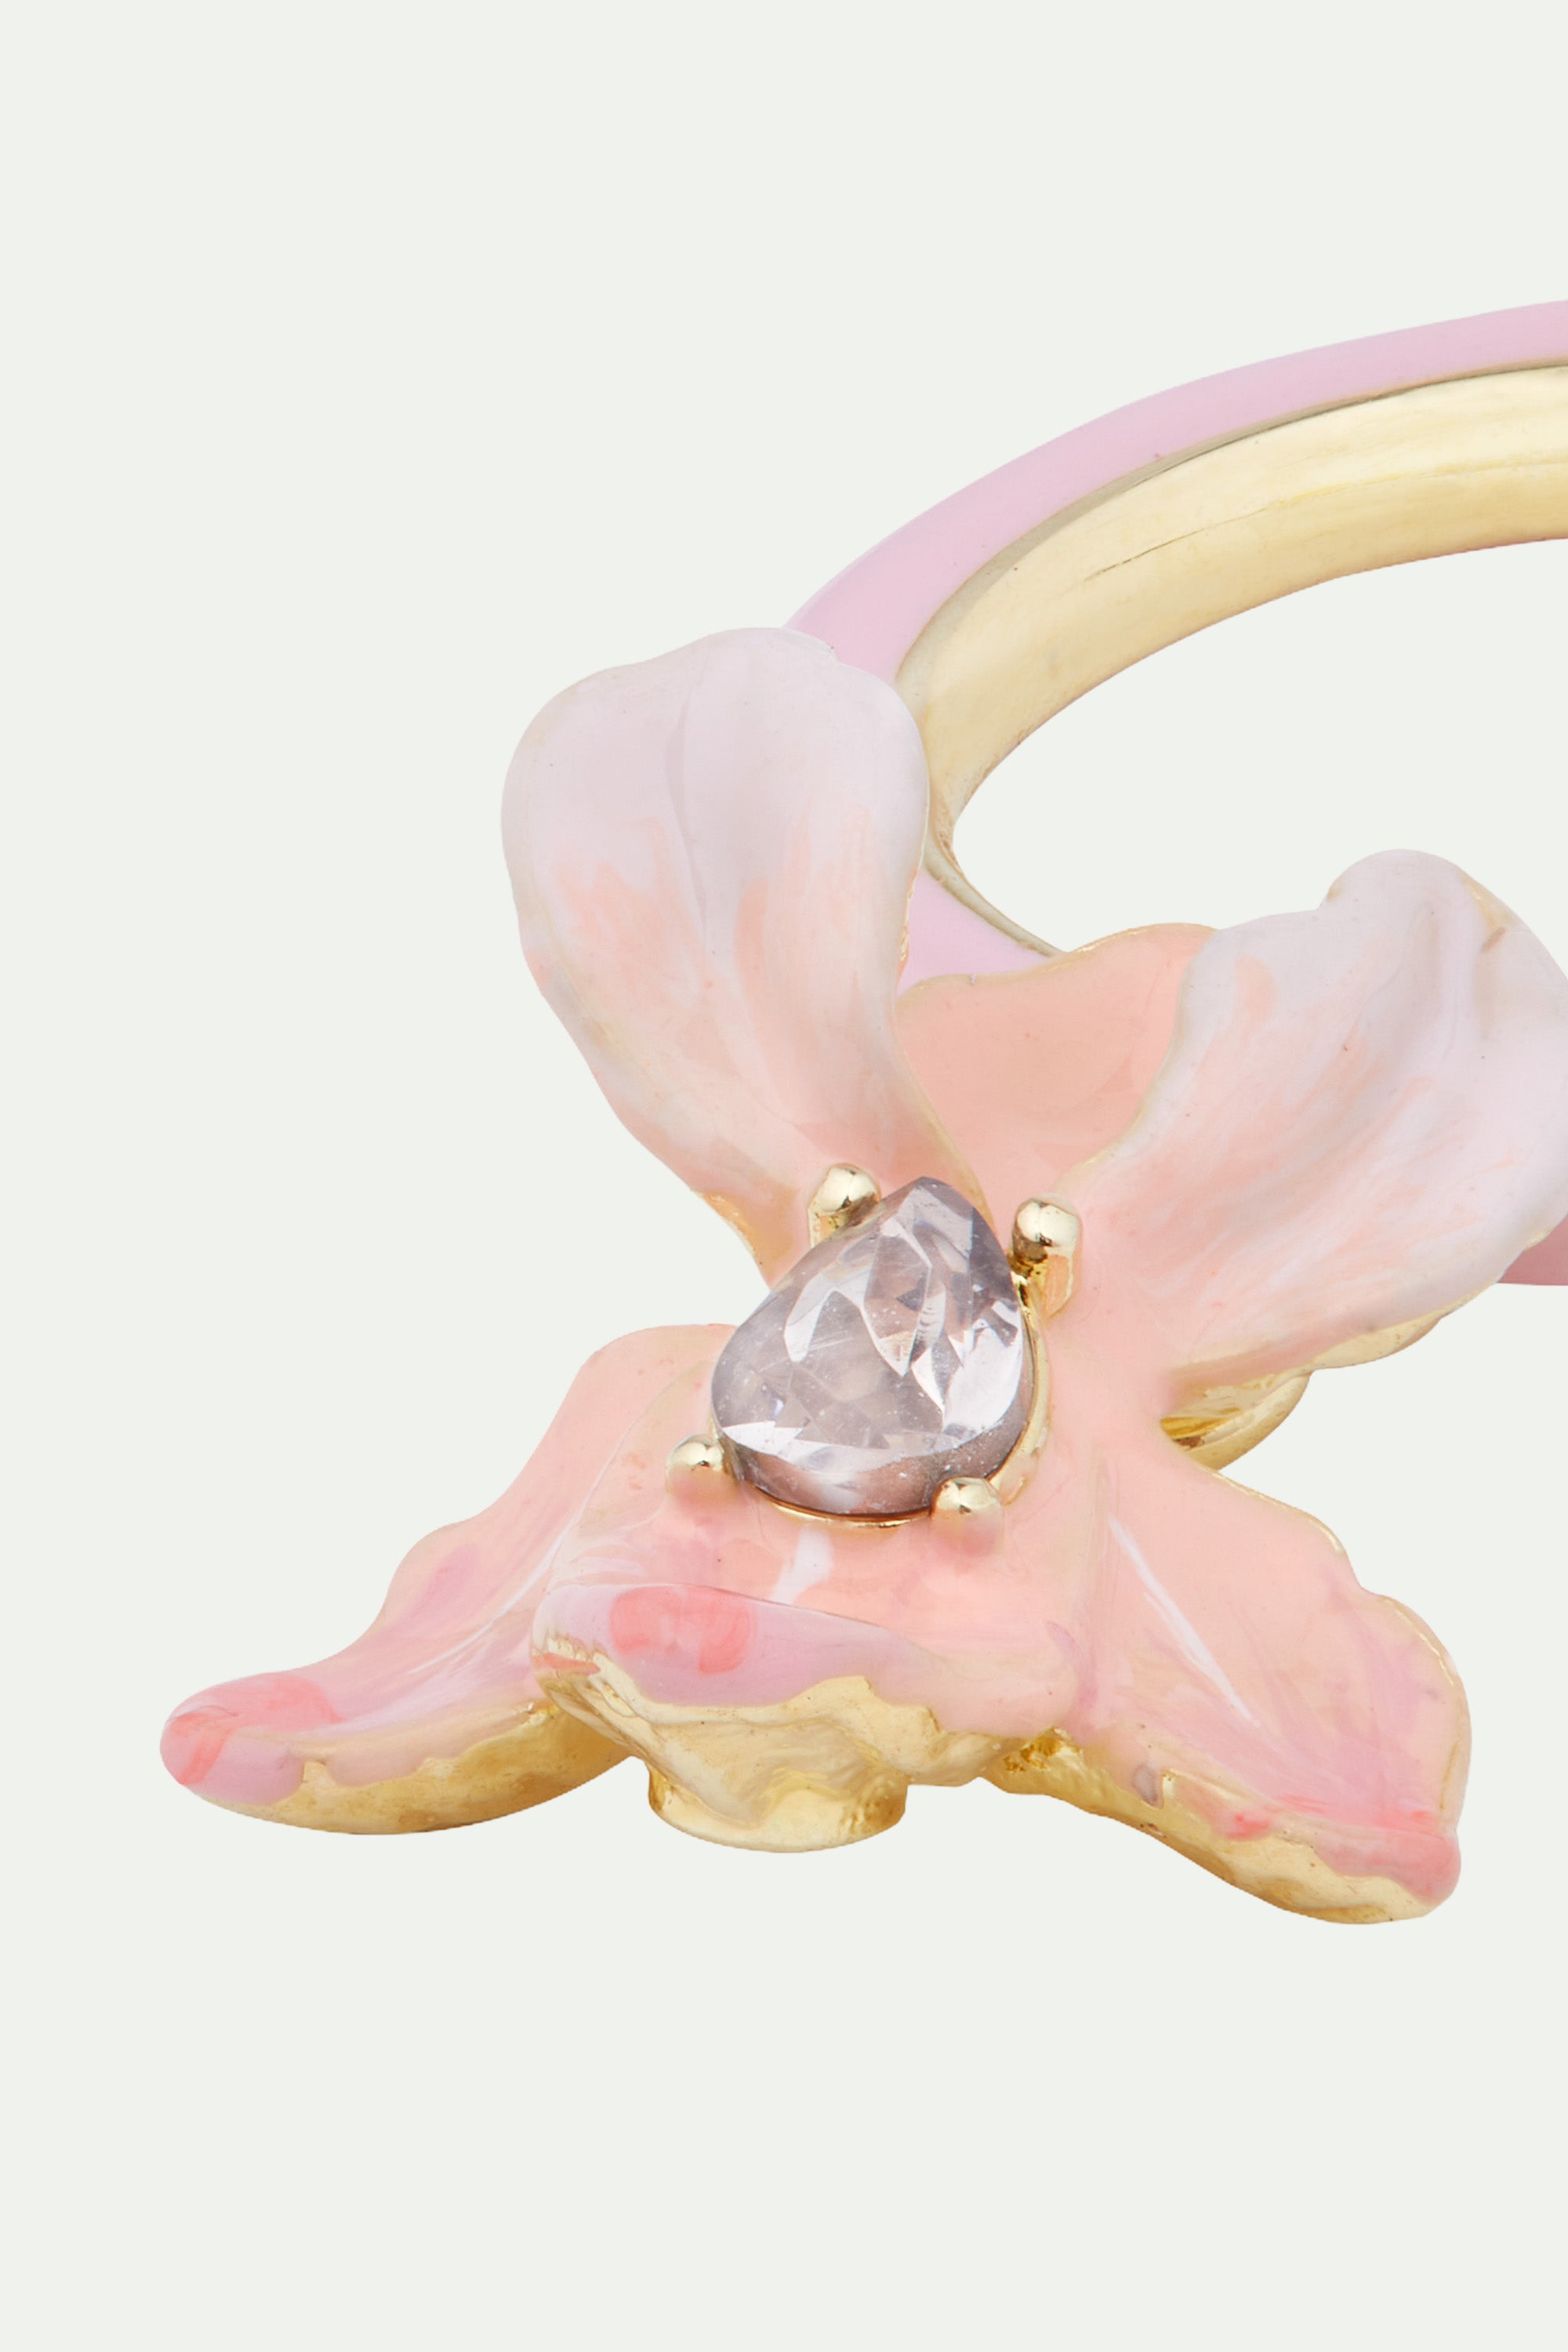 Powder pink Iris post earrings